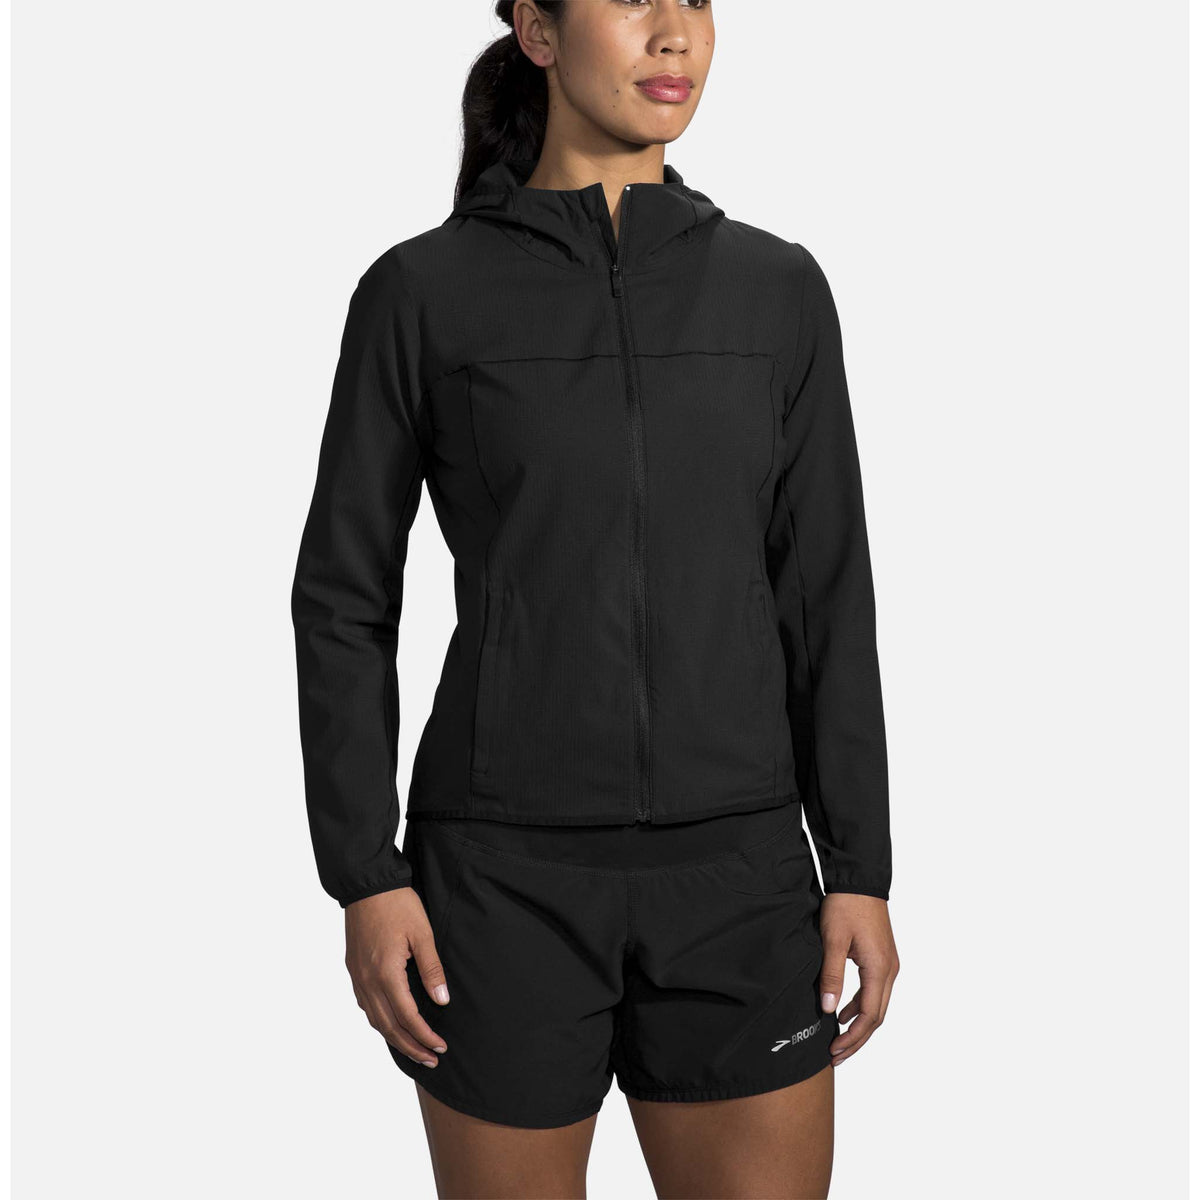 Brooks Canopy women's running jacket - Soccer Sport Fitness